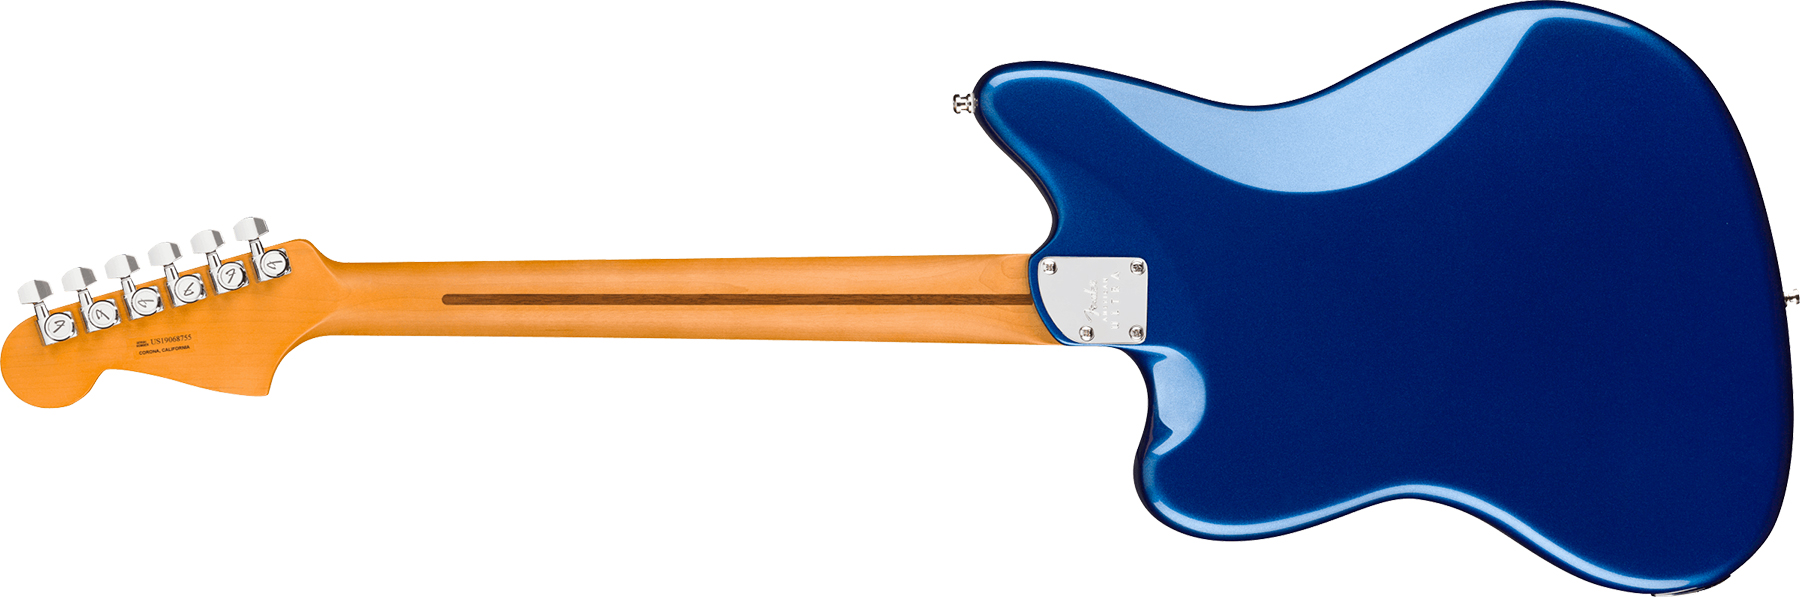 Fender Jazzmaster American Ultra 2019 Usa Mn - Cobra Blue - Guitarra electrica retro rock - Variation 1